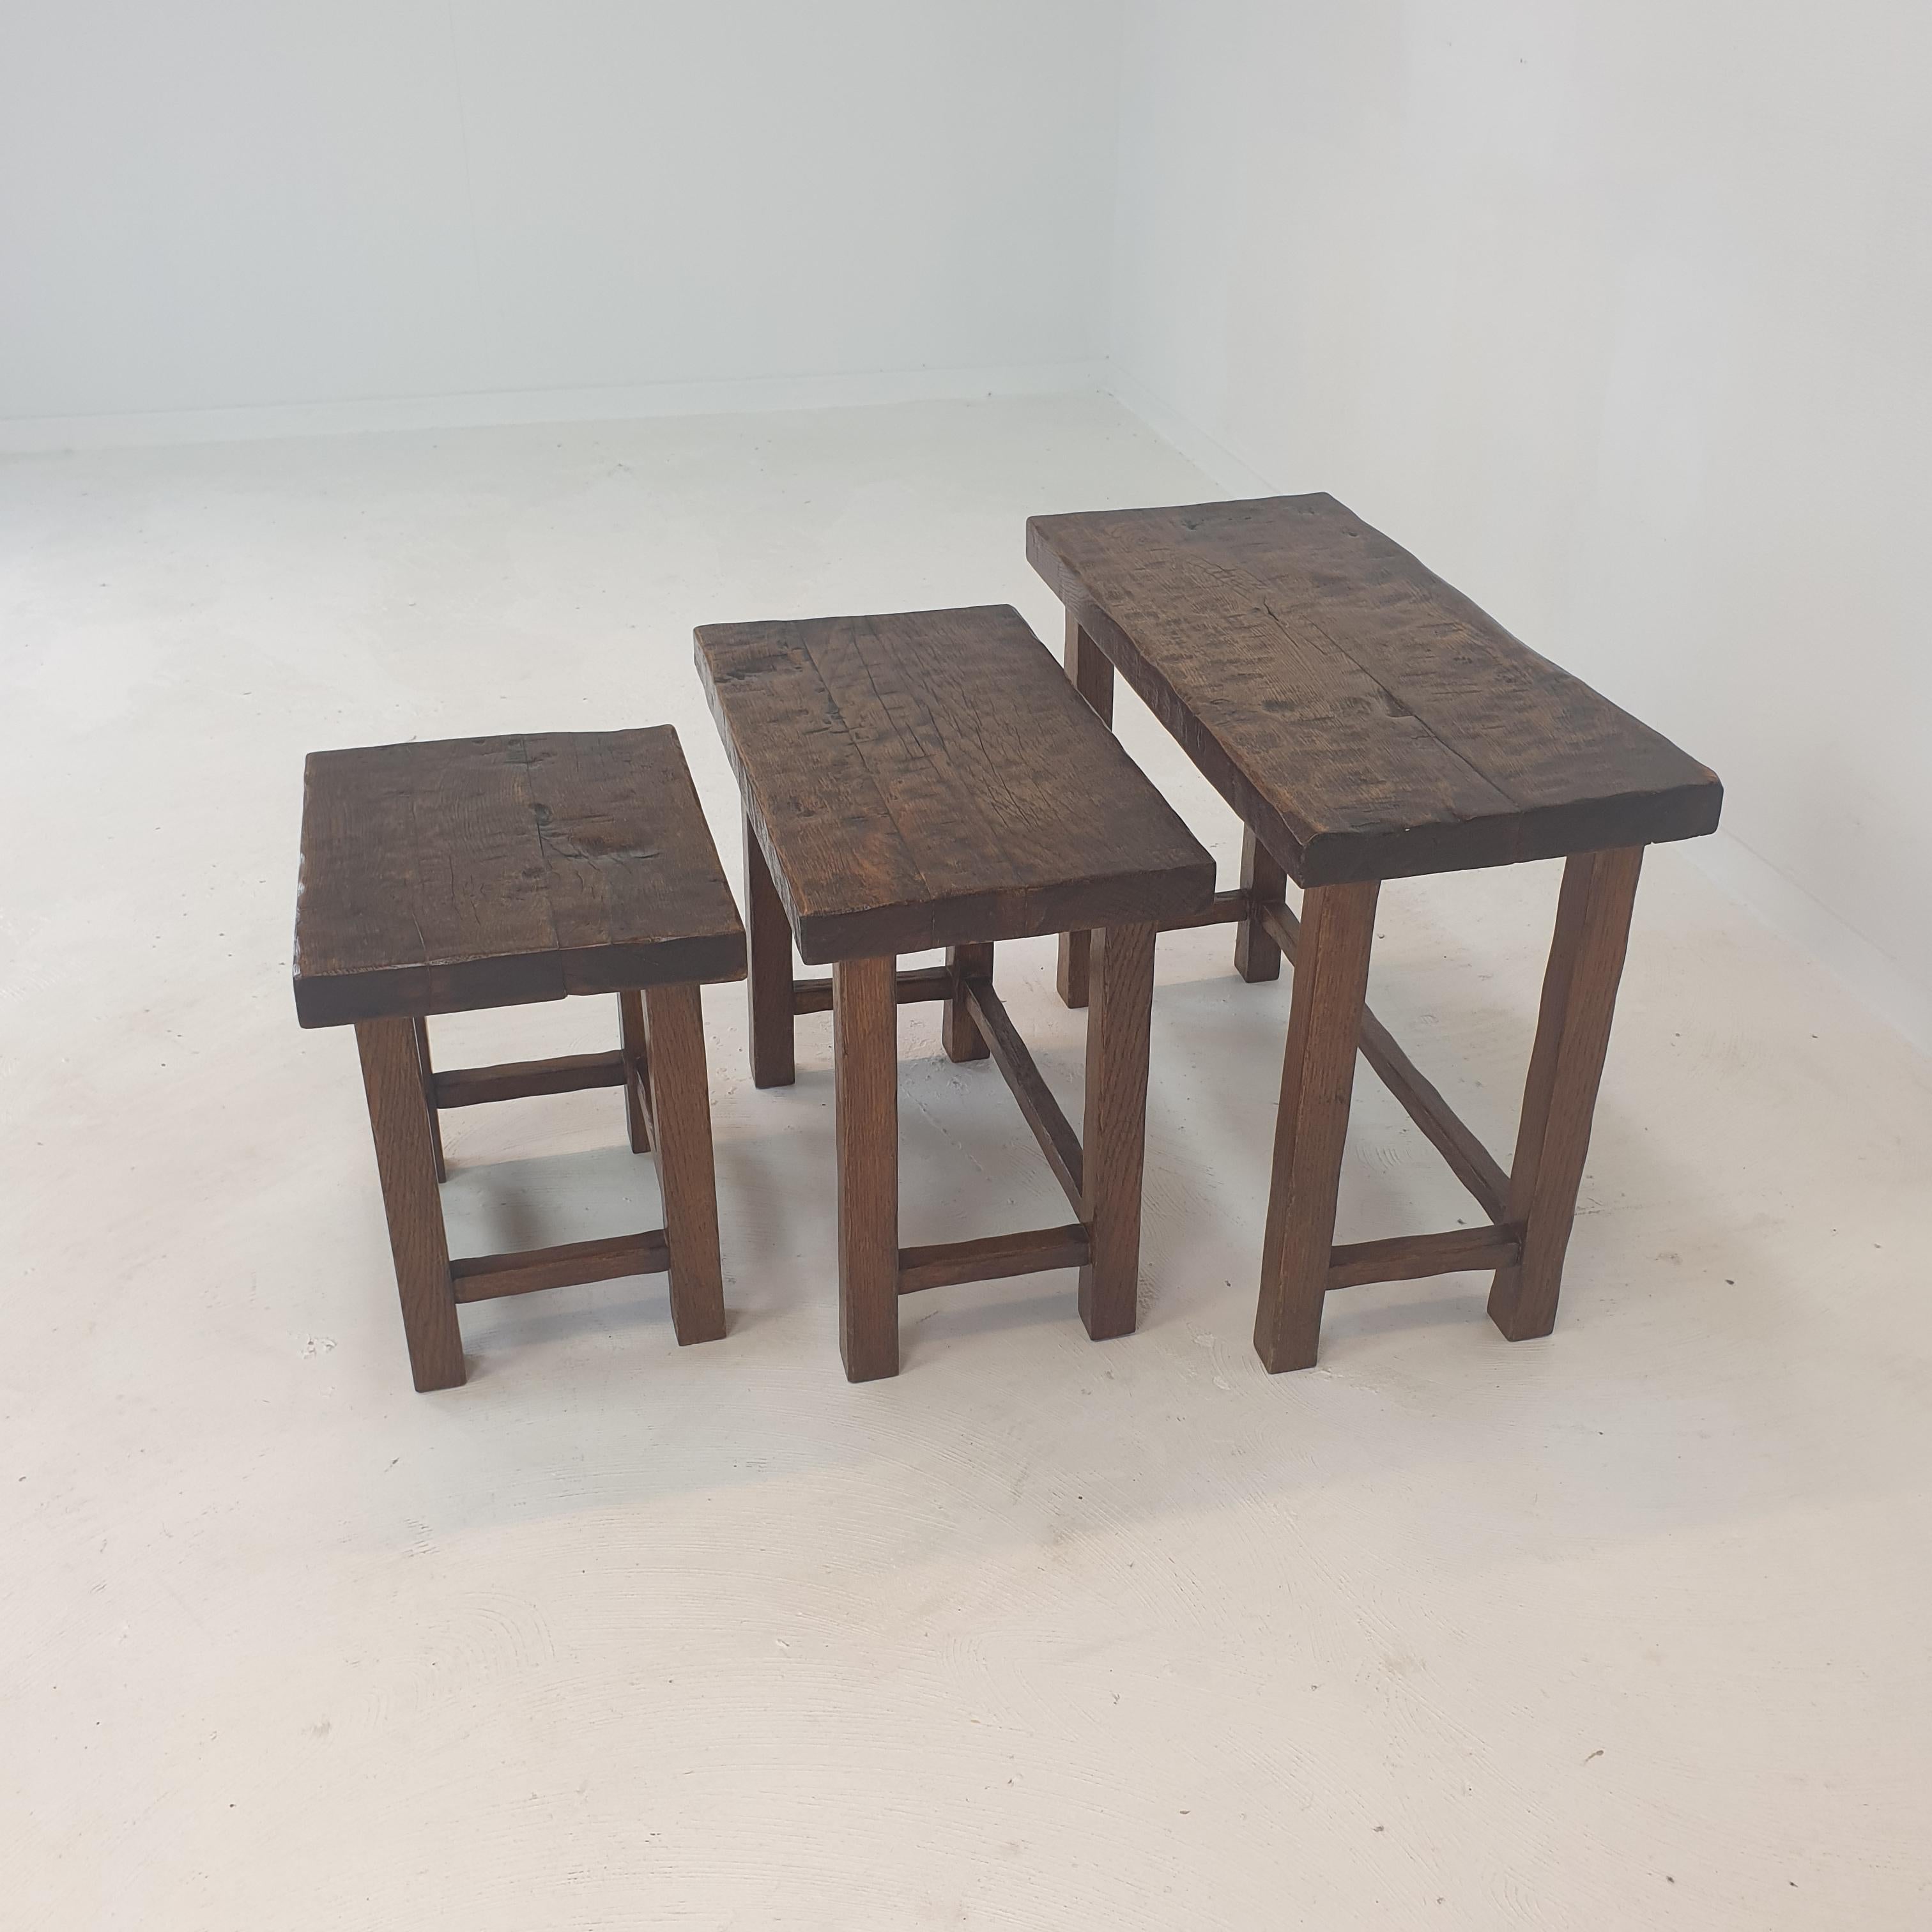 Brutalisme Ensemble de 3 tables gigognes brutalistes en bois, Hollande, années 1960 en vente